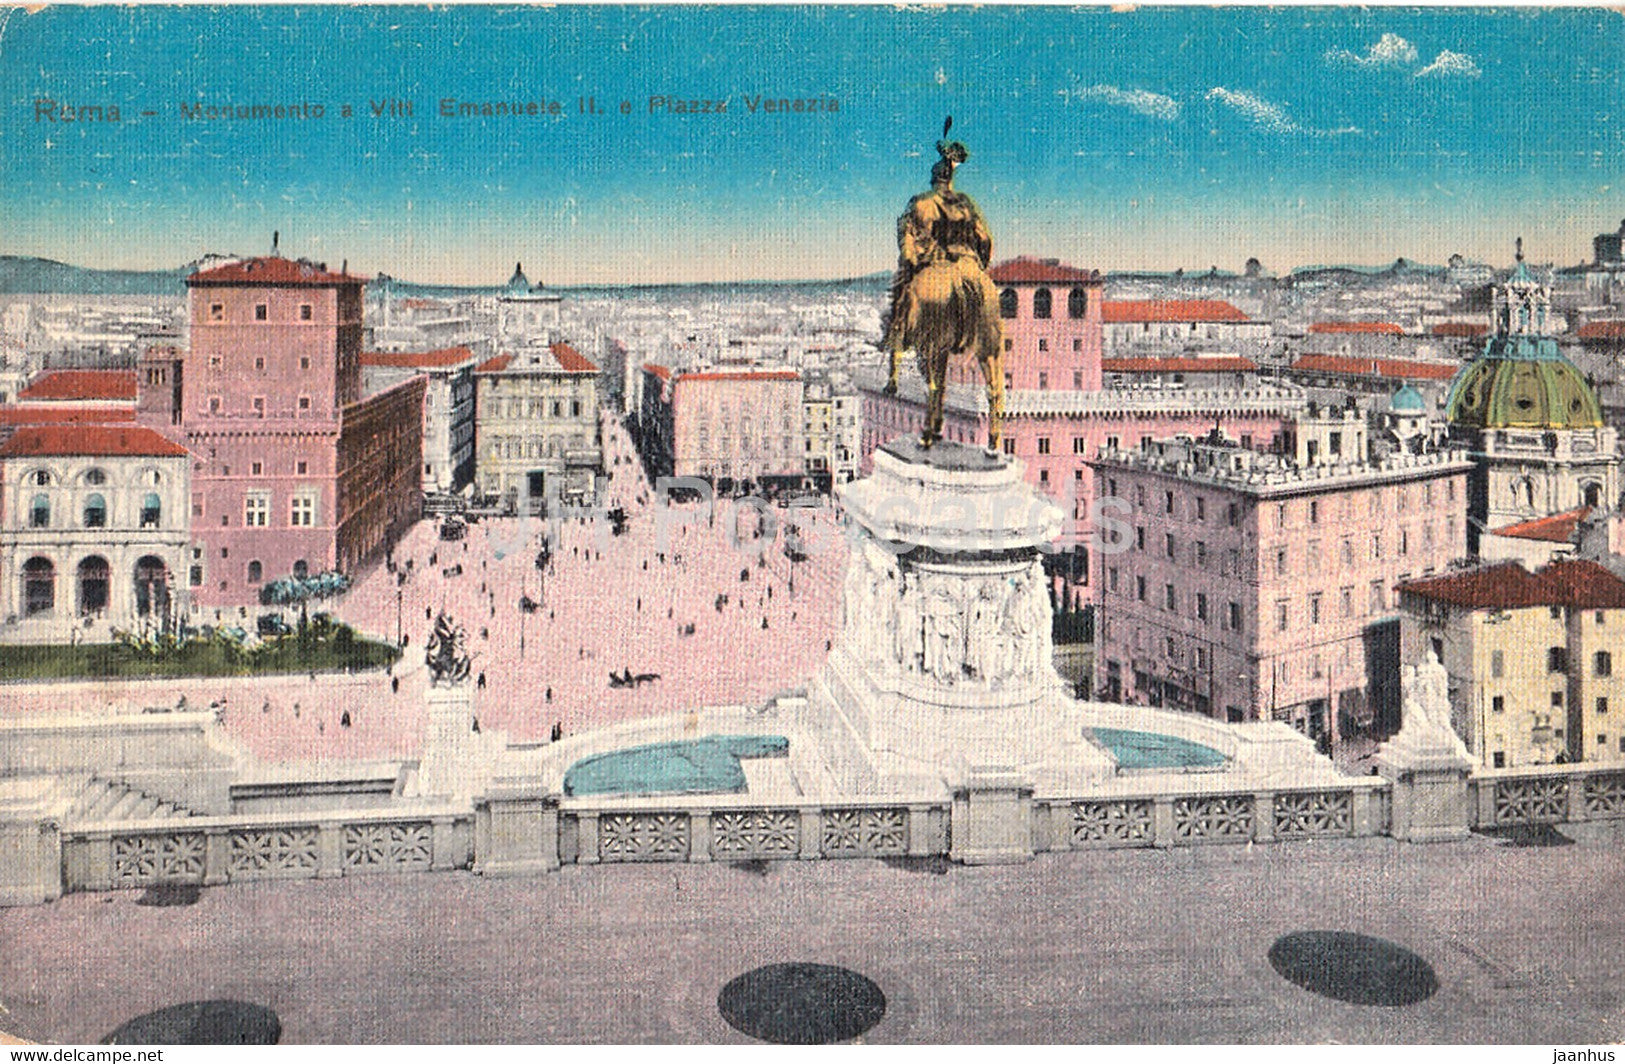 Roma - Rome - Piazza Venezia e monumento a Vittorio Emanuele II - monument - 4391 - old postcard - Italy - unused - JH Postcards